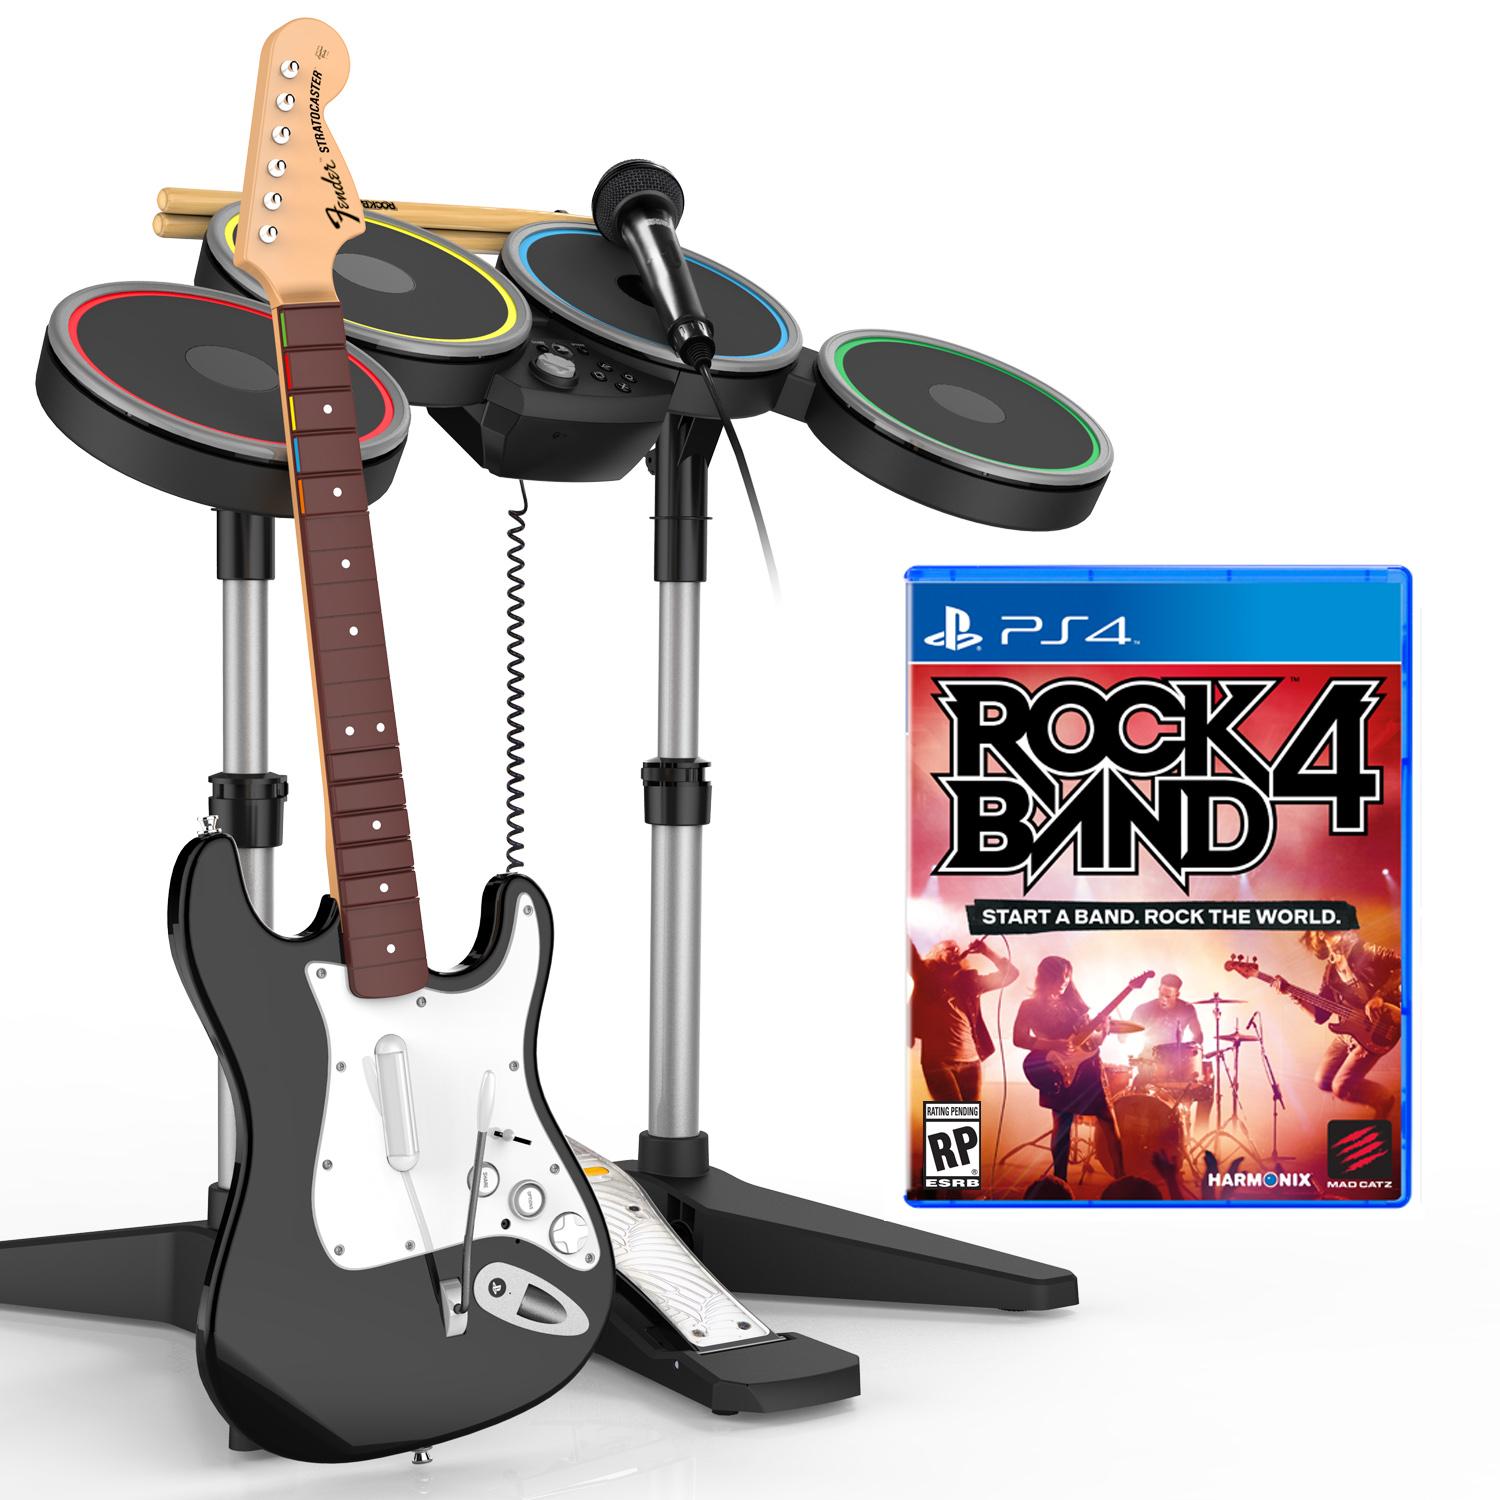 Rock Band 4 Band-In-A-Box Bundel (PS4), Harmonix/MadCatz